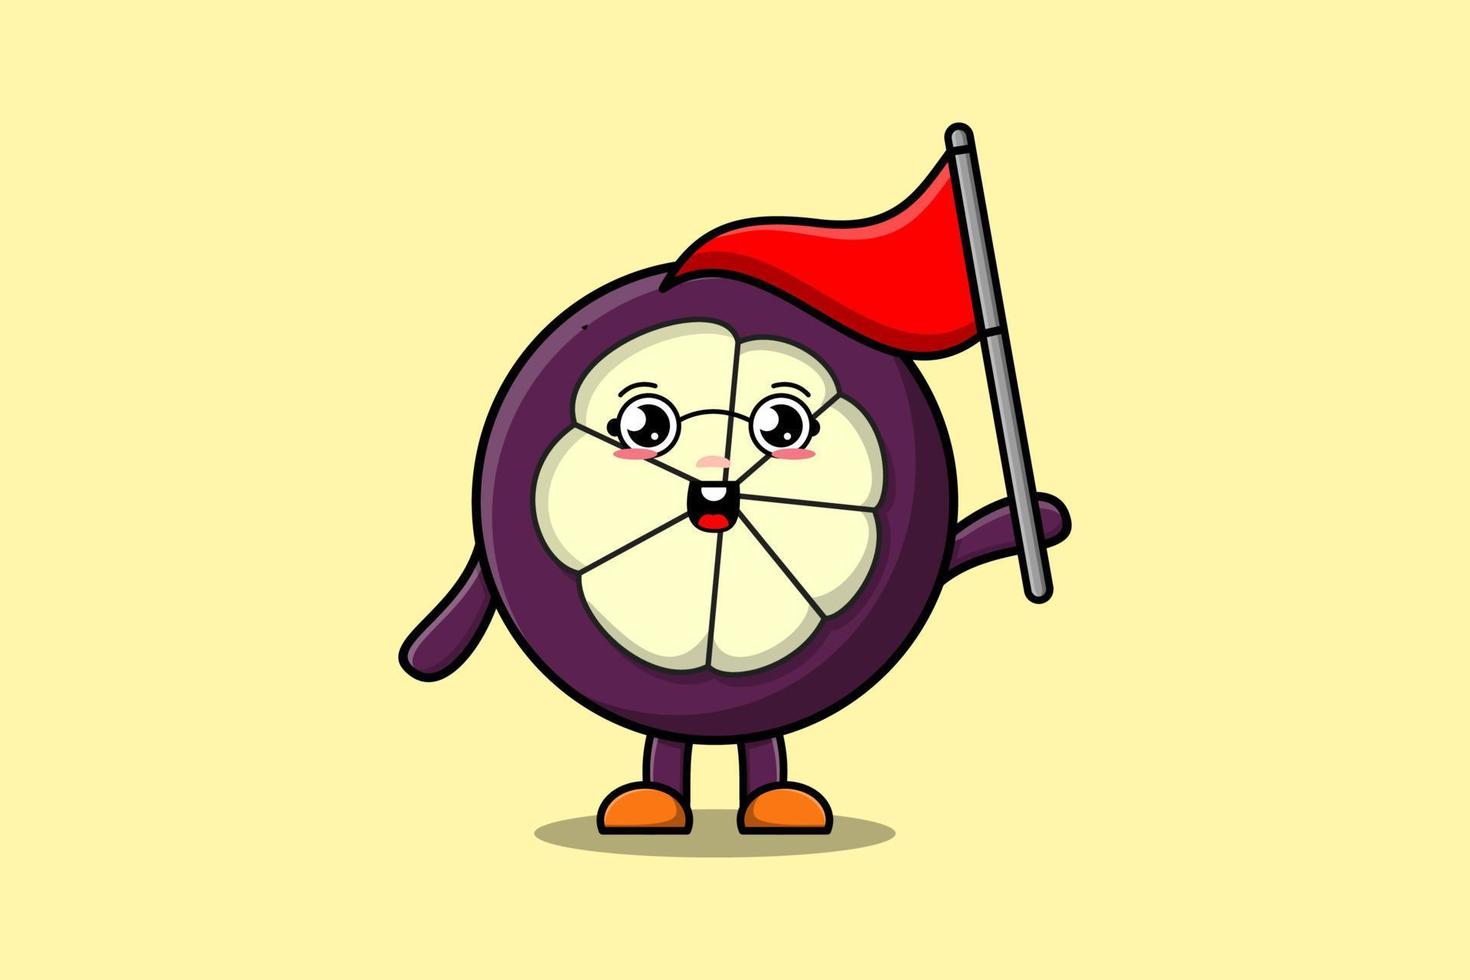 Cute cartoon Mangosteen holding triangle flag vector